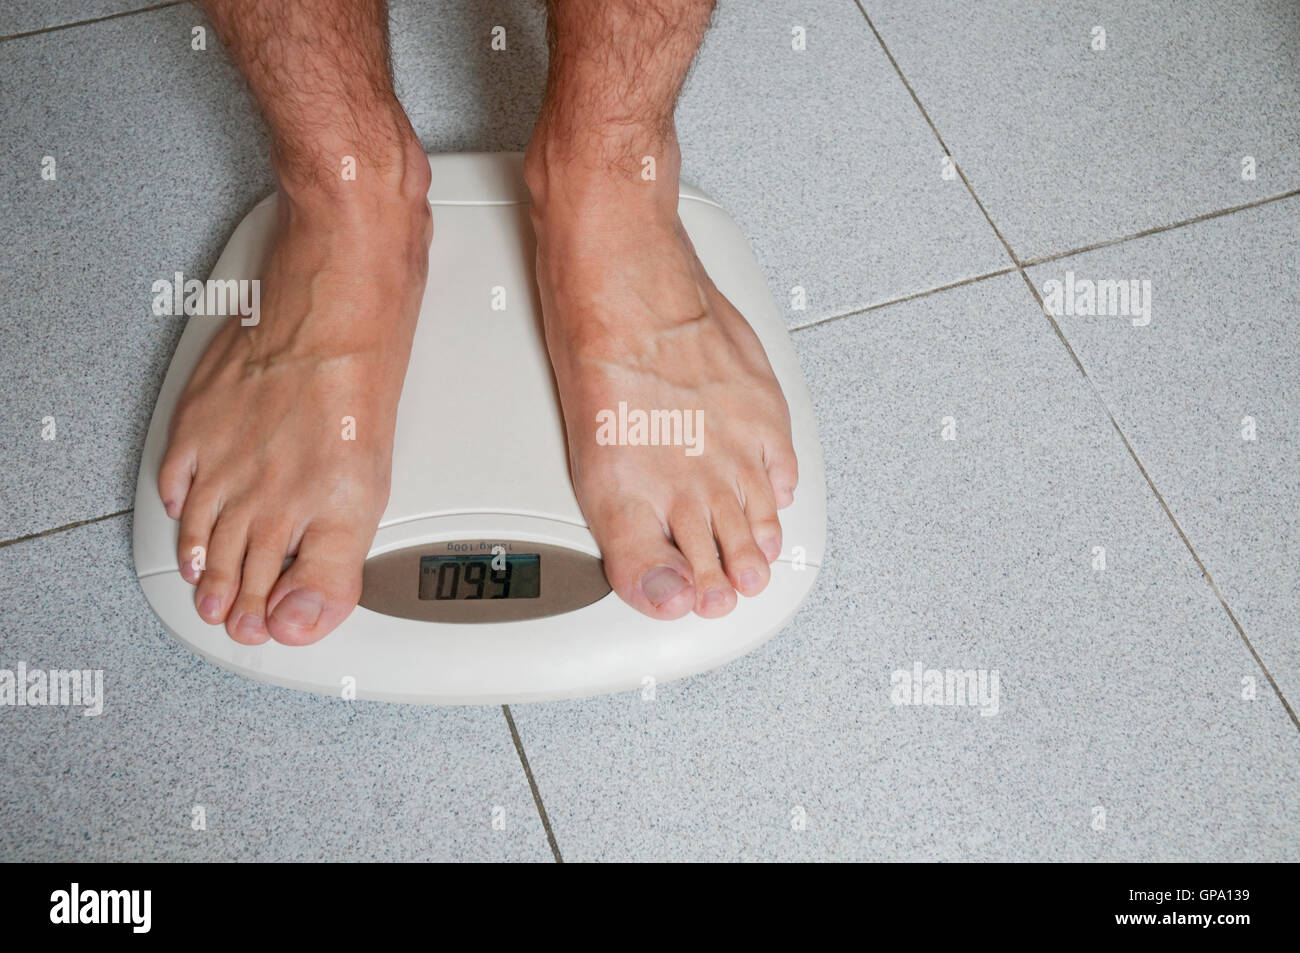 Mature man weighing himself. Stock Photo